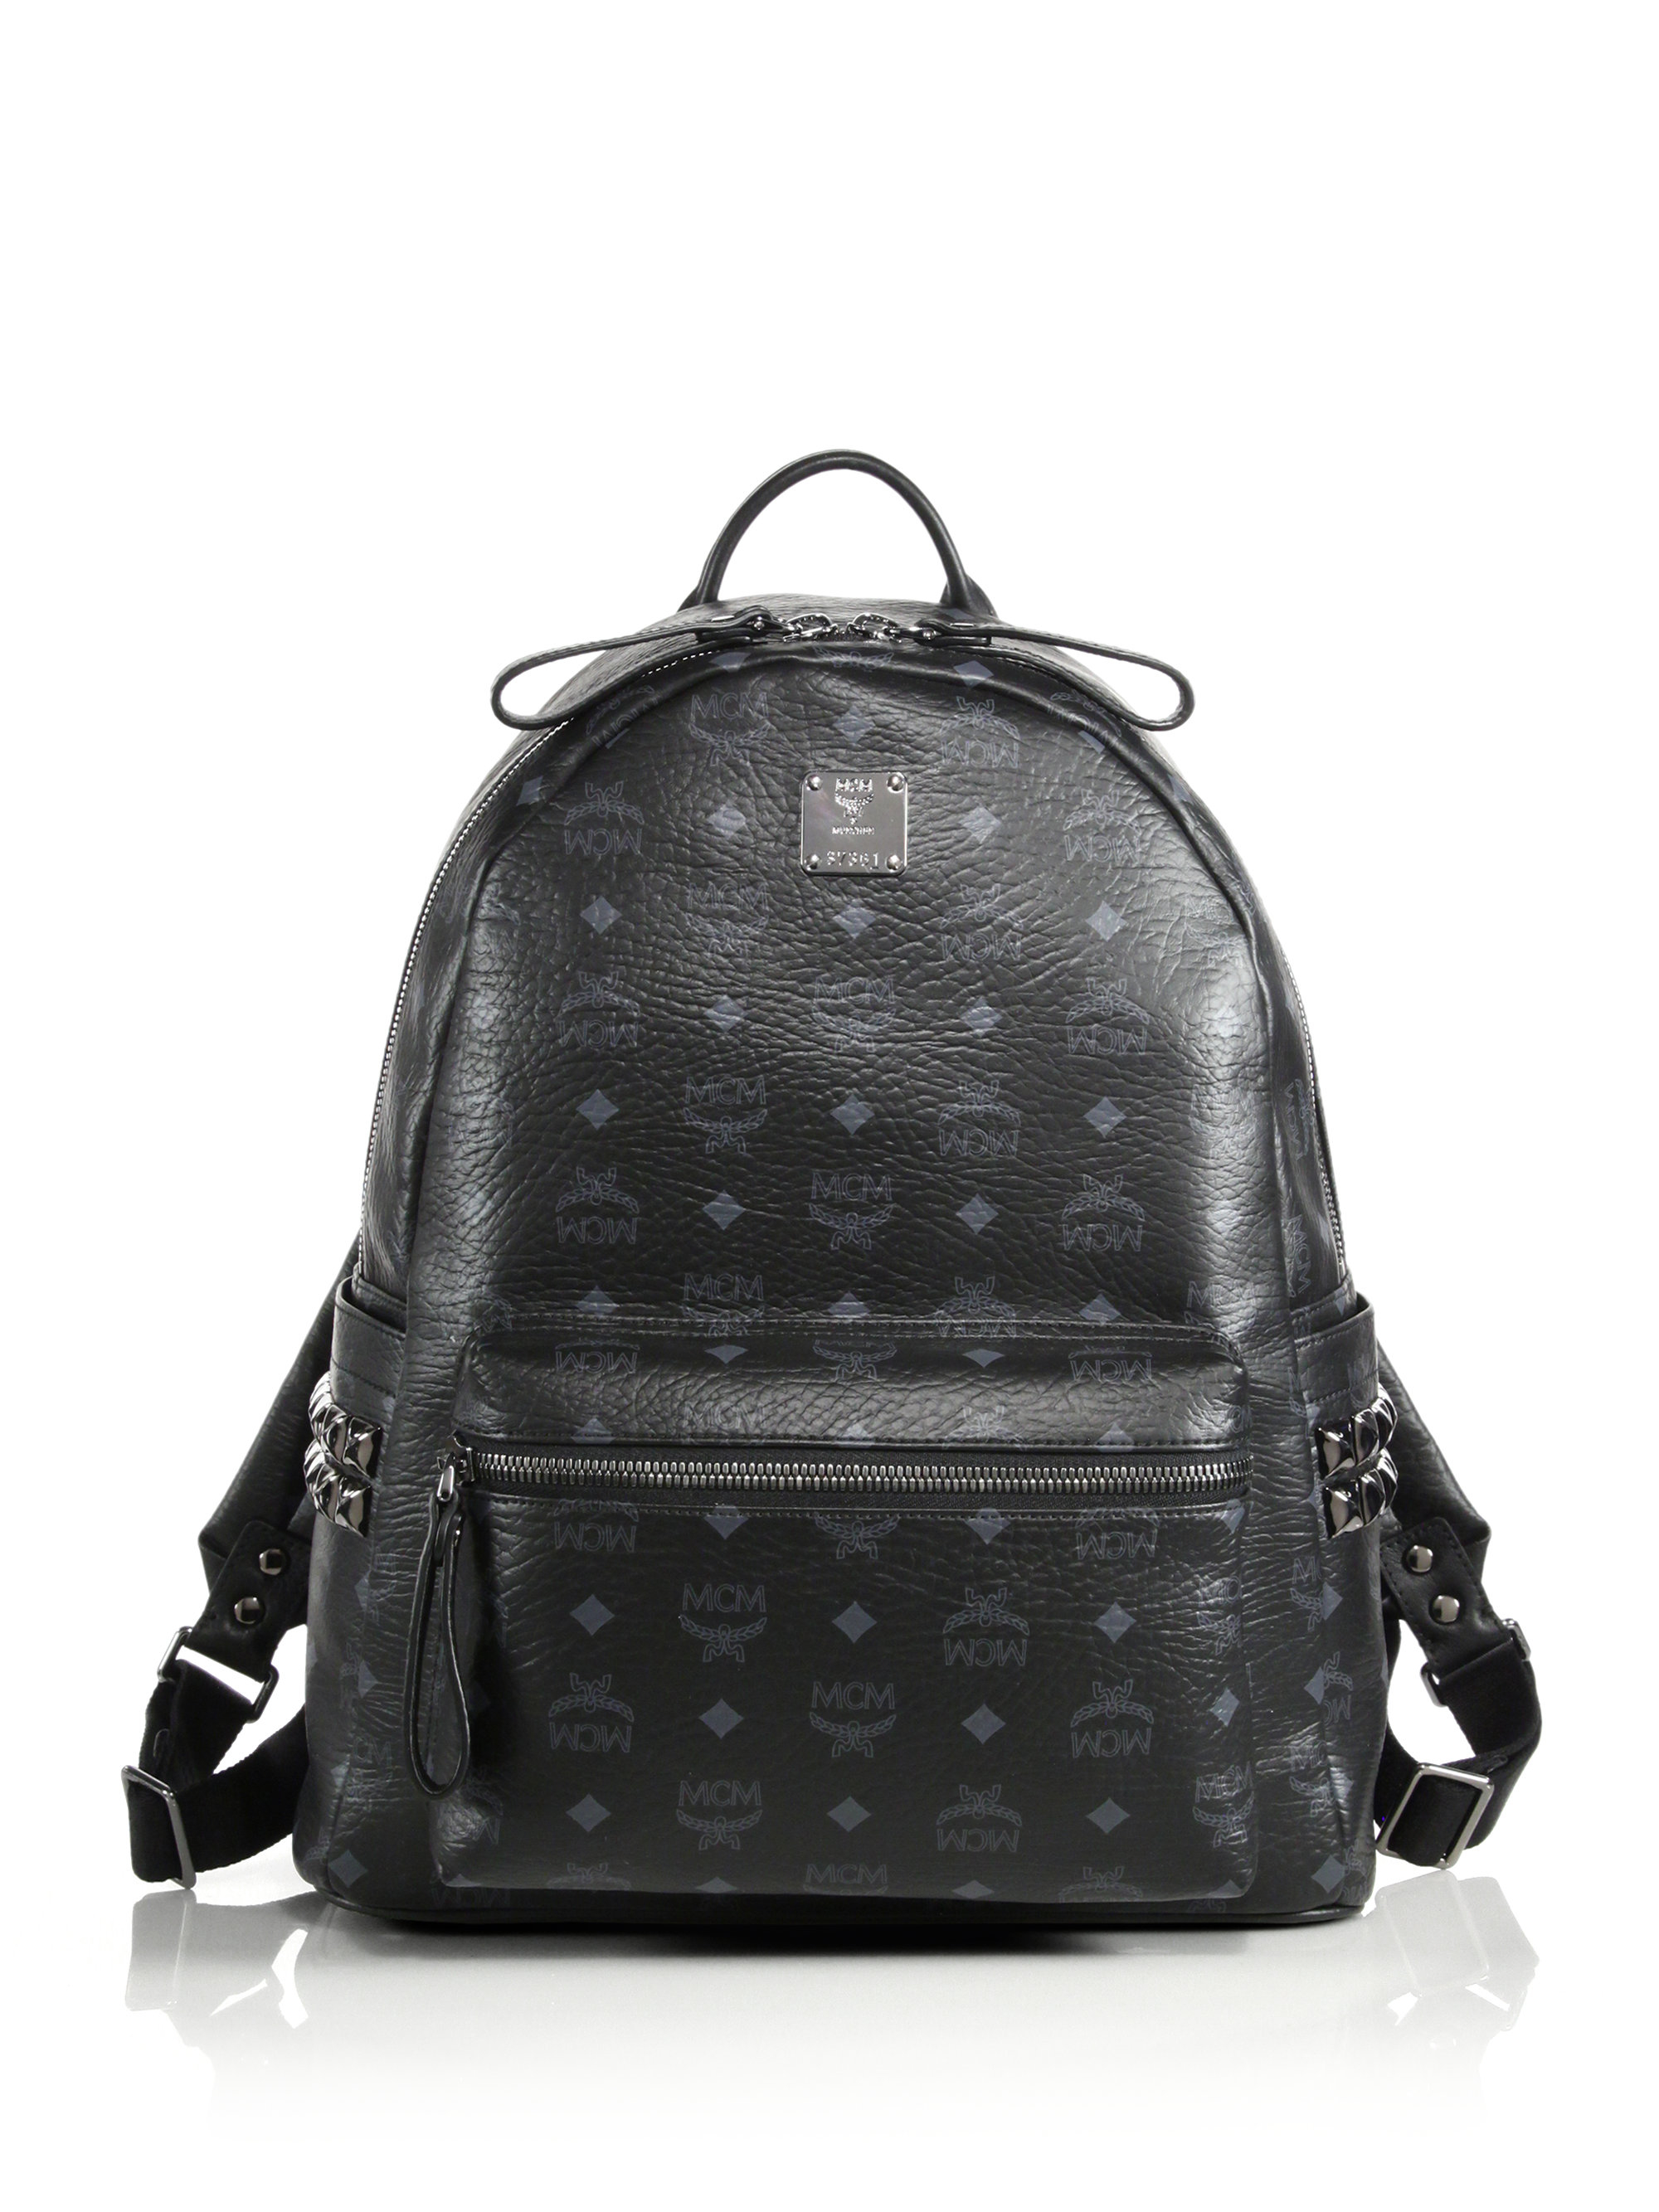 Mcm Stark Side Stud Medium Coated Canvas Backpack in Black | Lyst